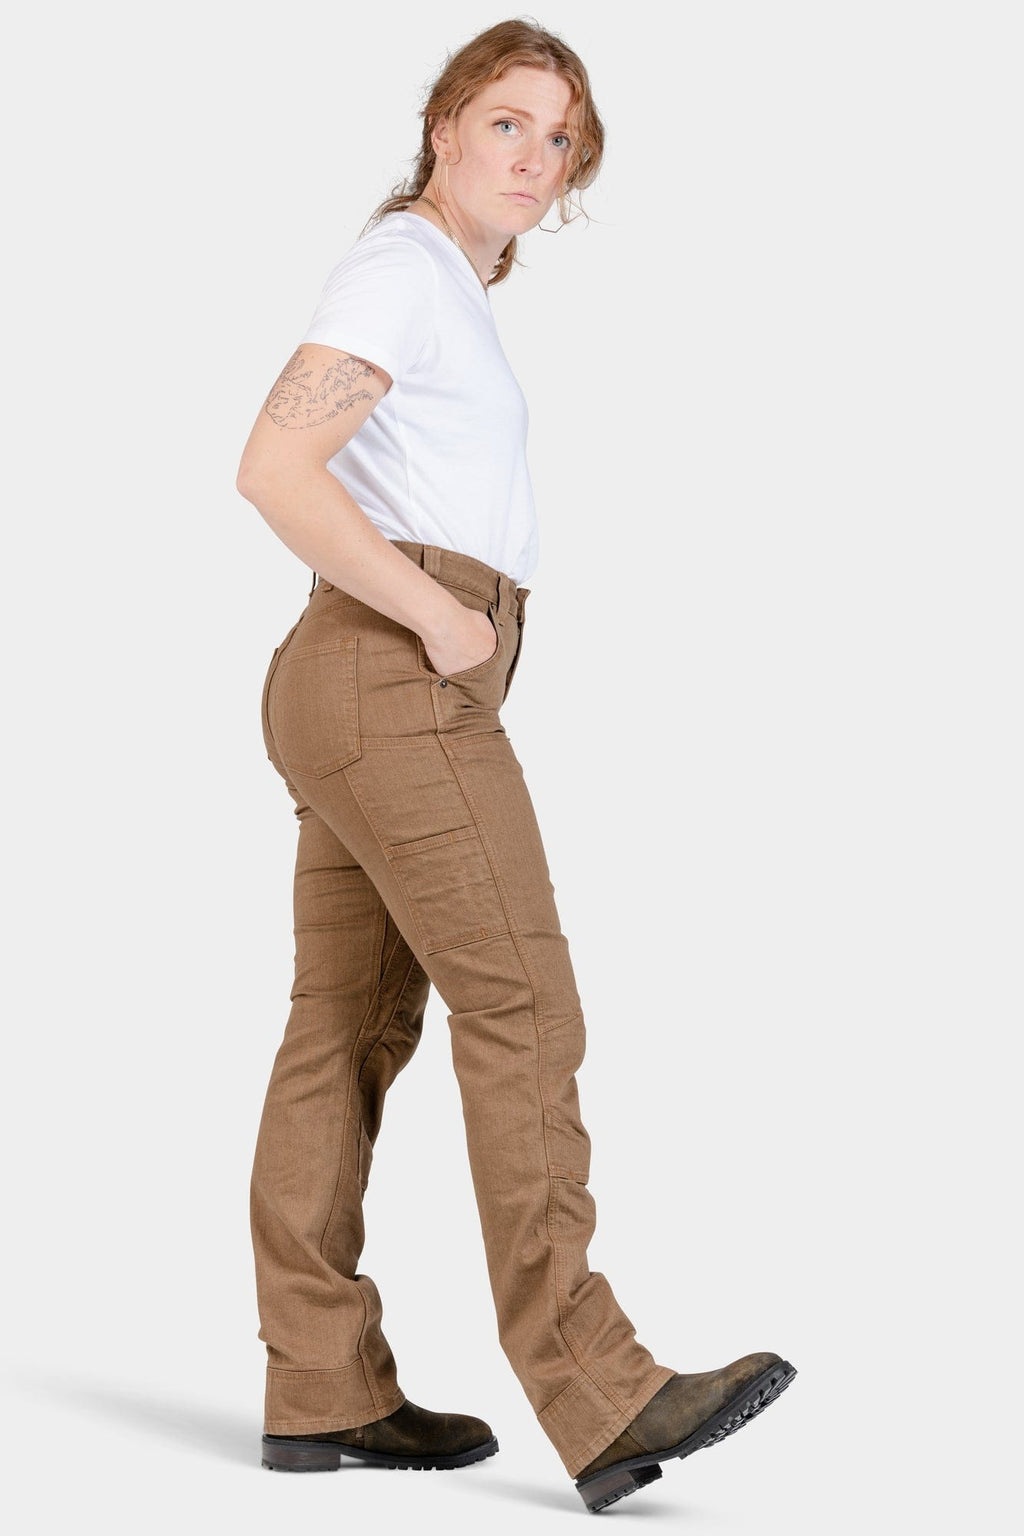 Women's utility pants  Dovetail Workwear Canada